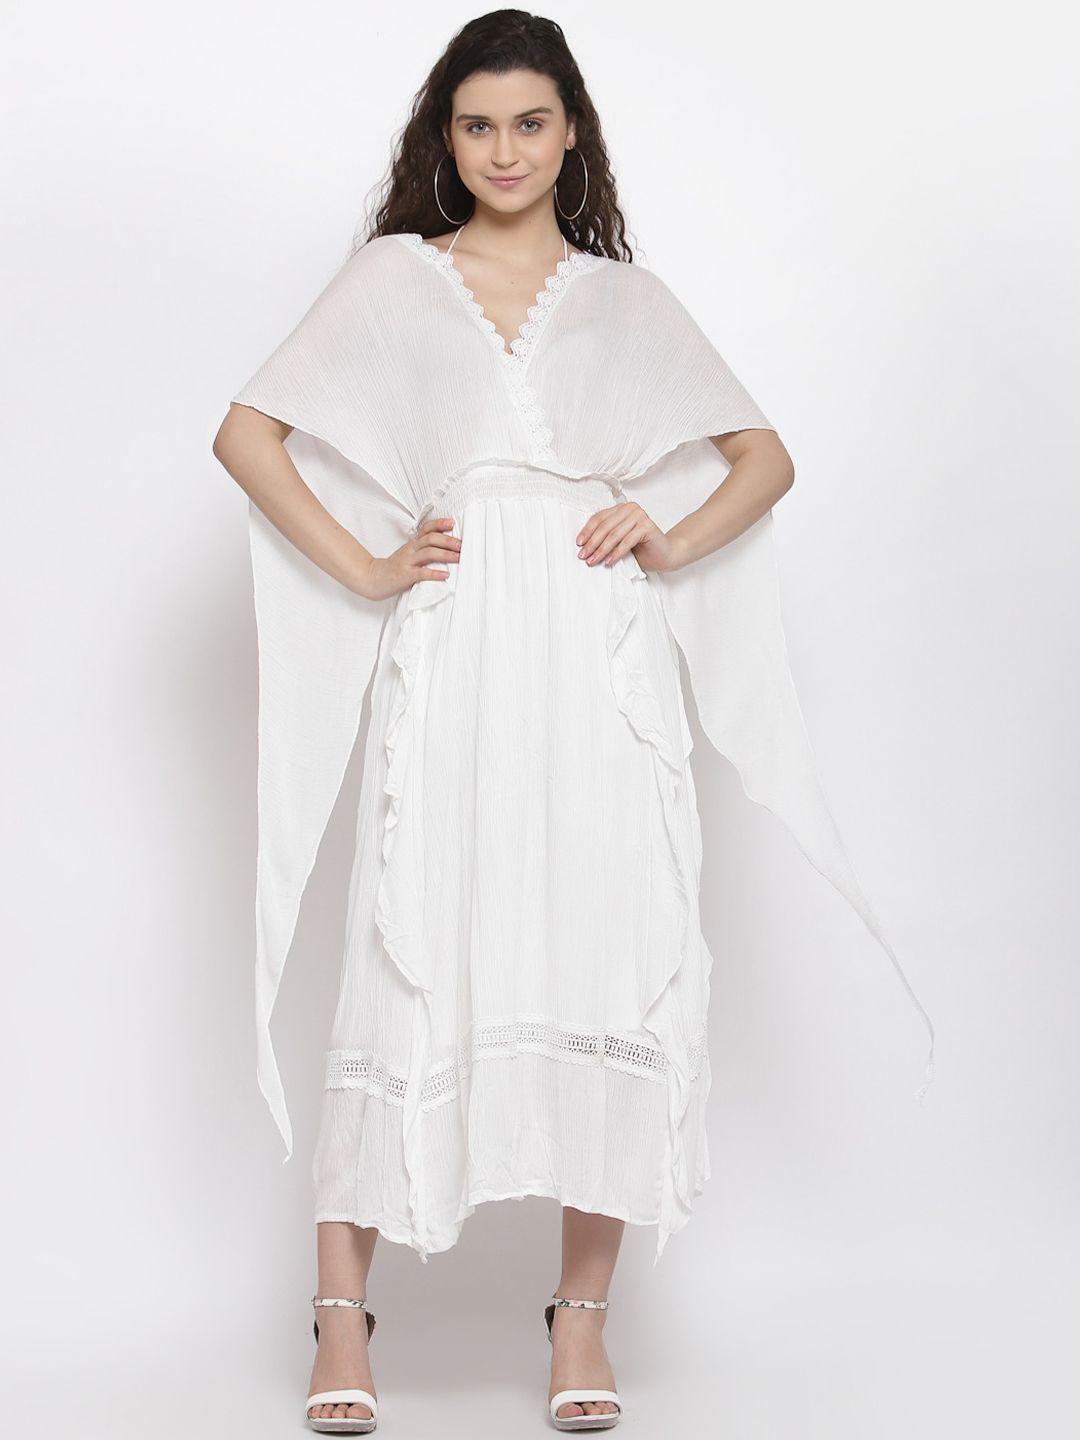 iki chic white midi fit & flare cotton dress